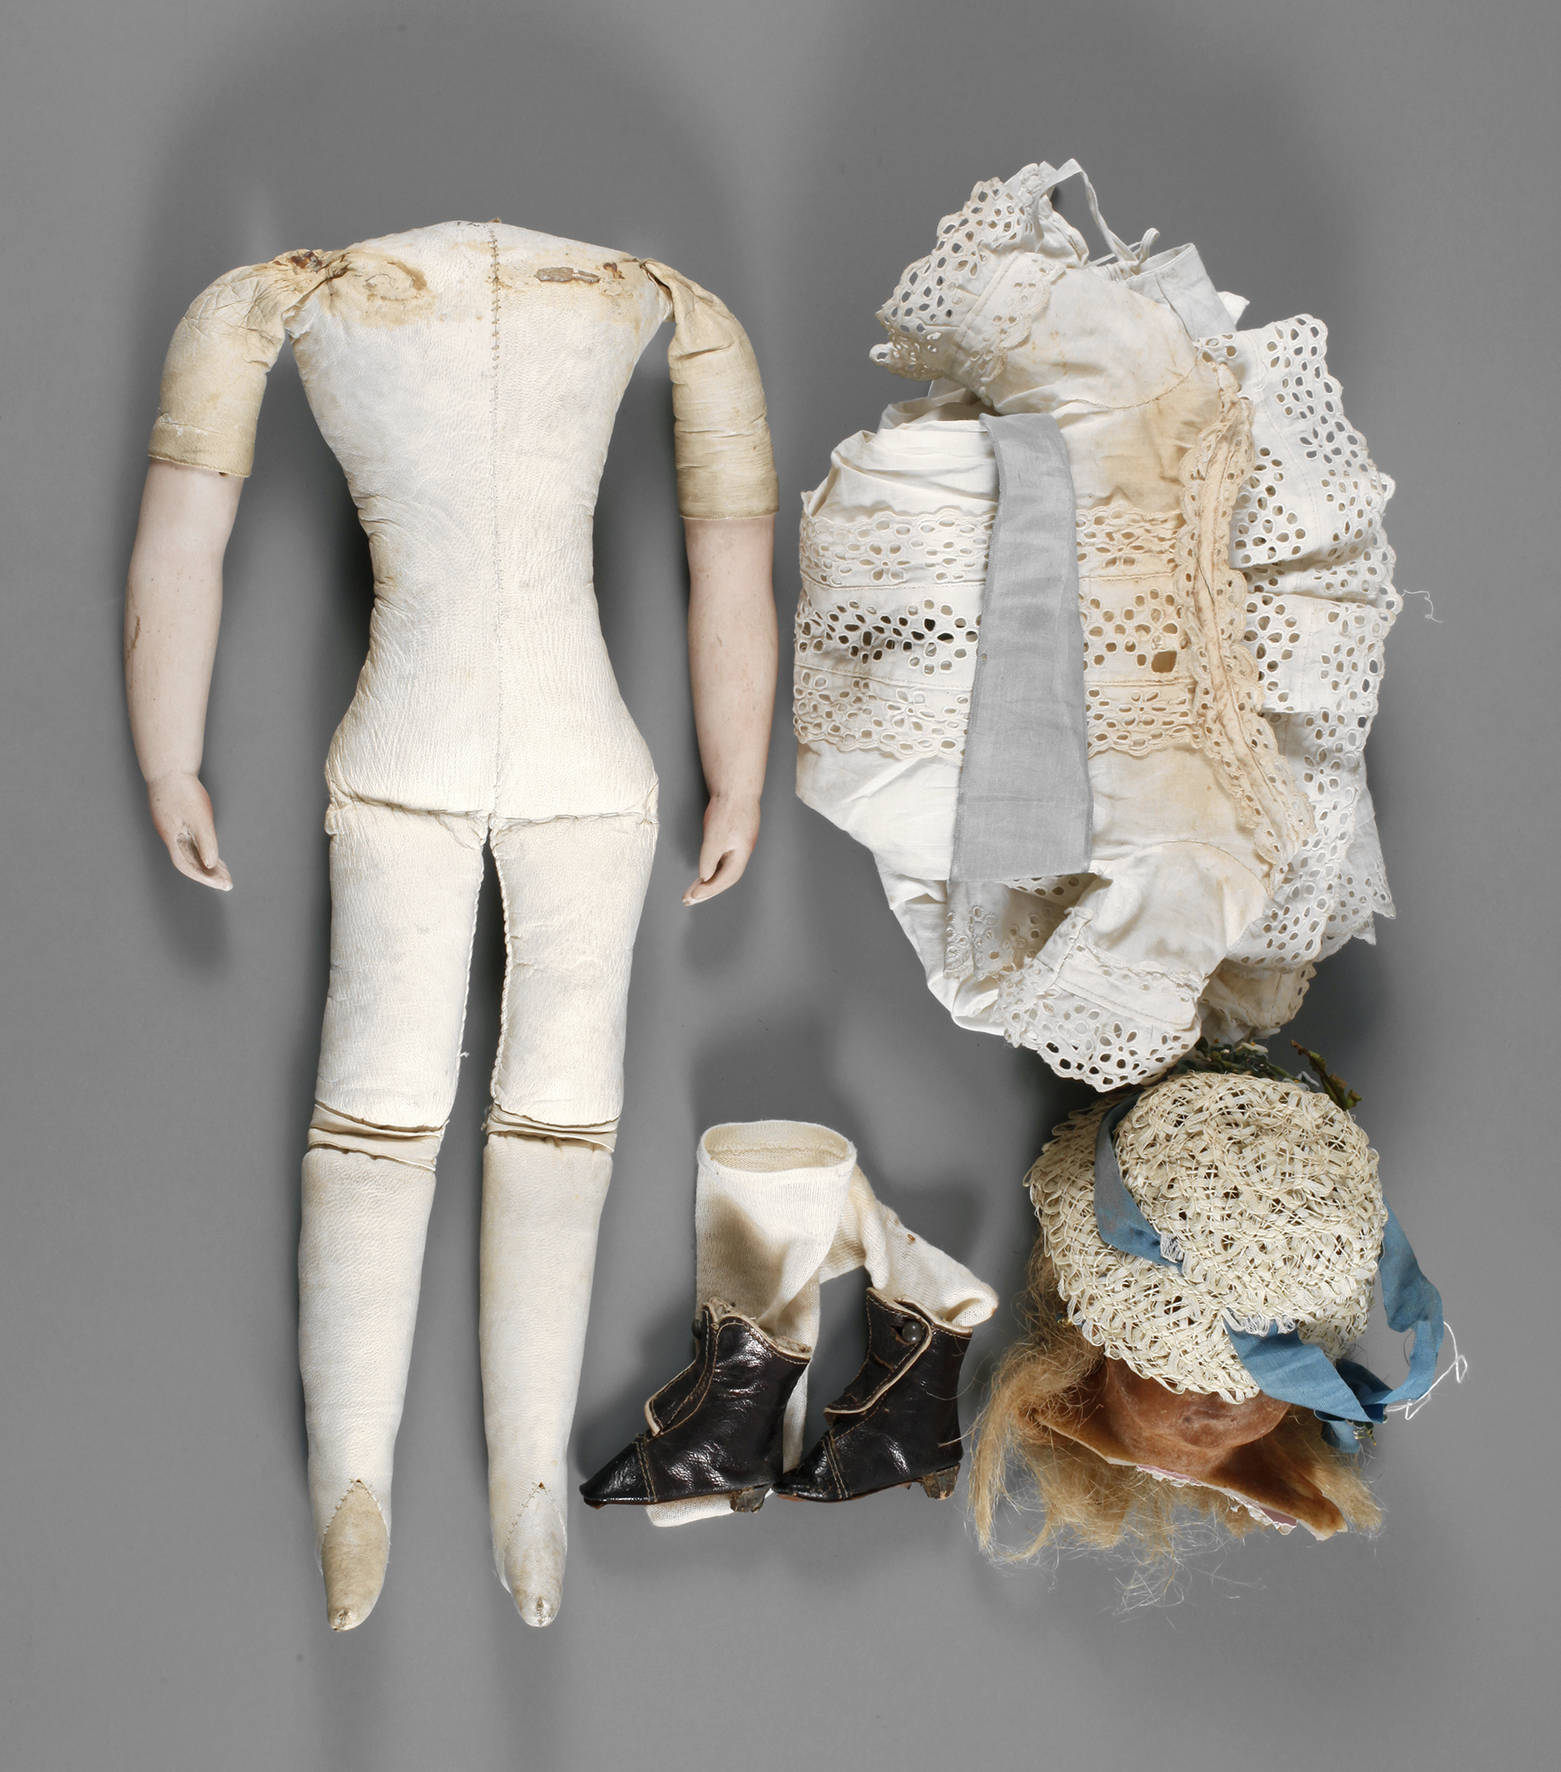 Leder-Puppenkörper mit Kleidung